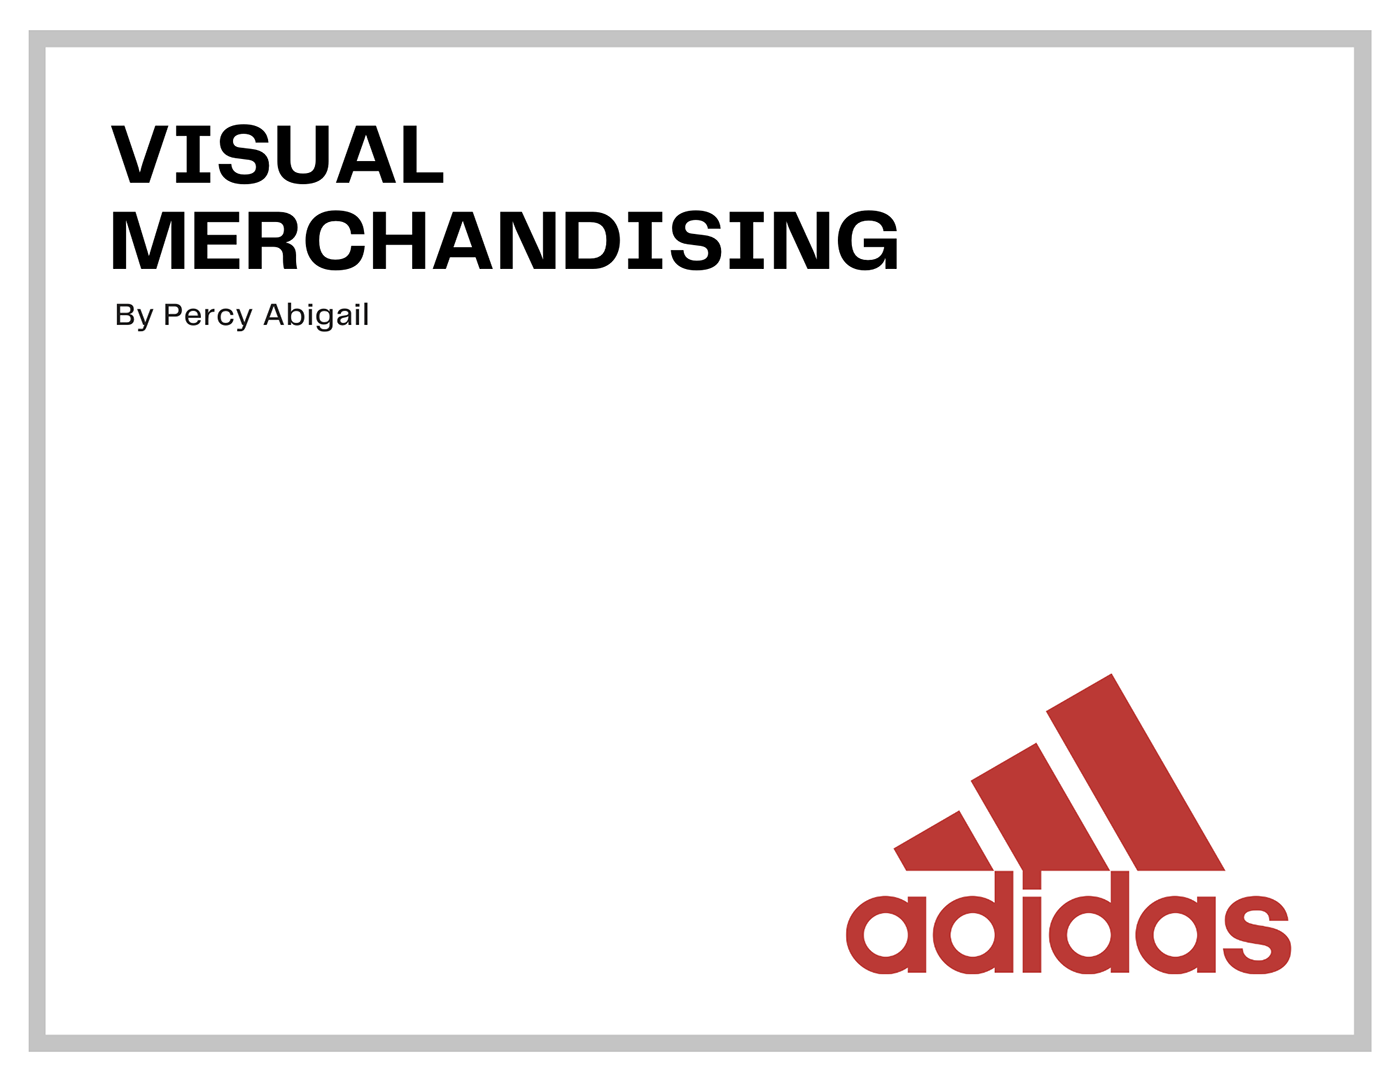 adidas merchandise Space  visual visualmerchandising  